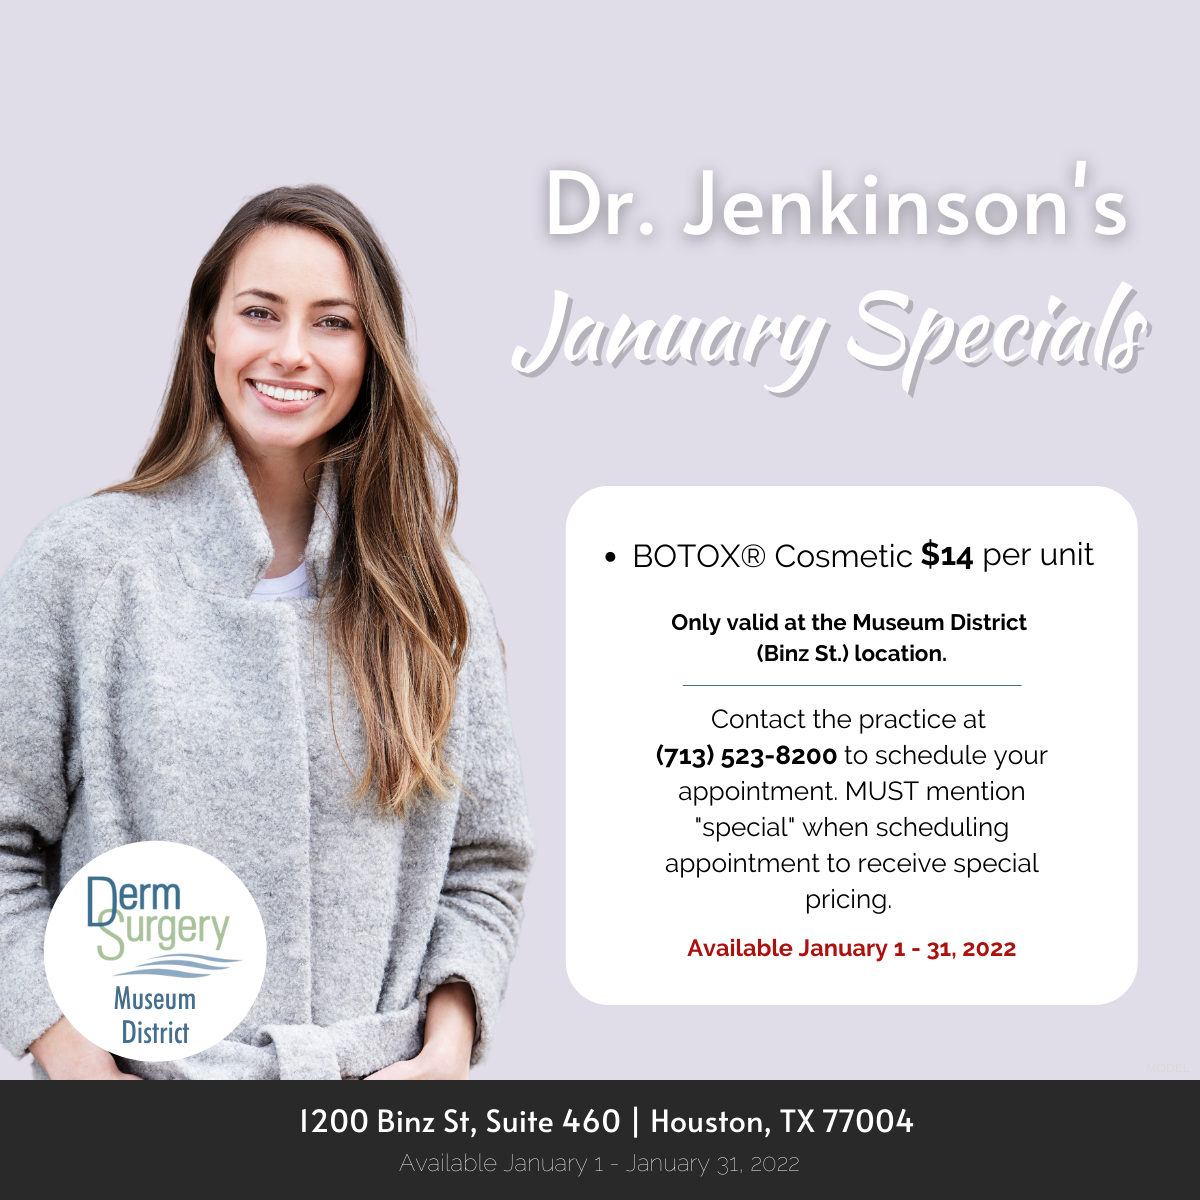 Dr. Jenkinson's January Specials